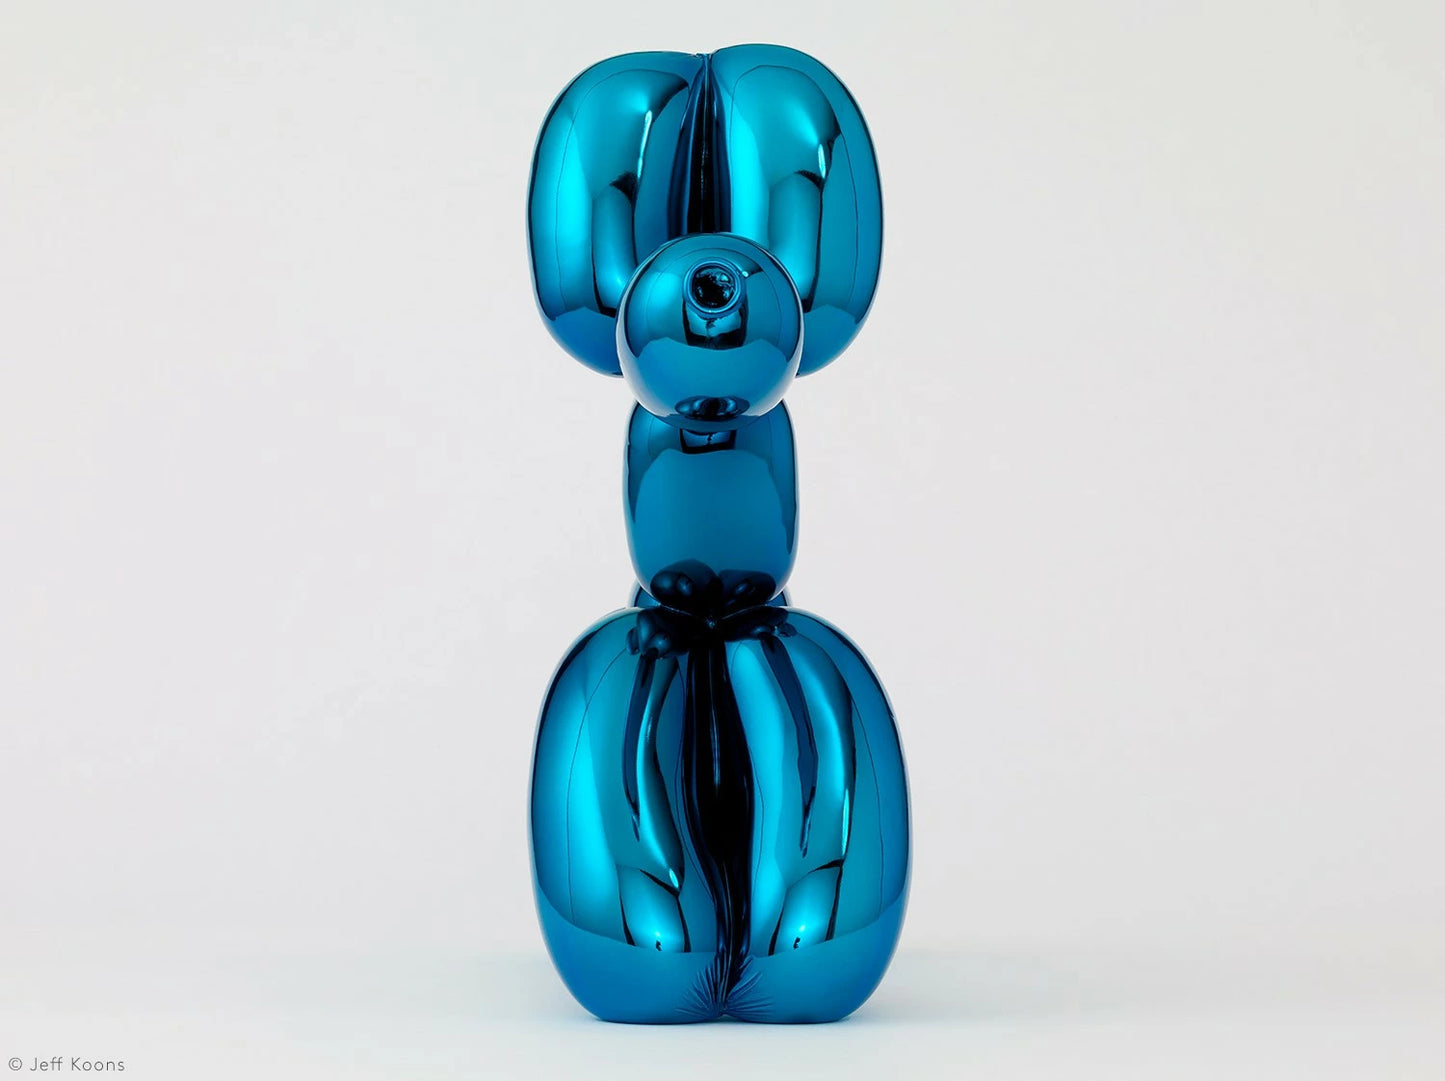 Balloon Dog bleu by Jeff Koons